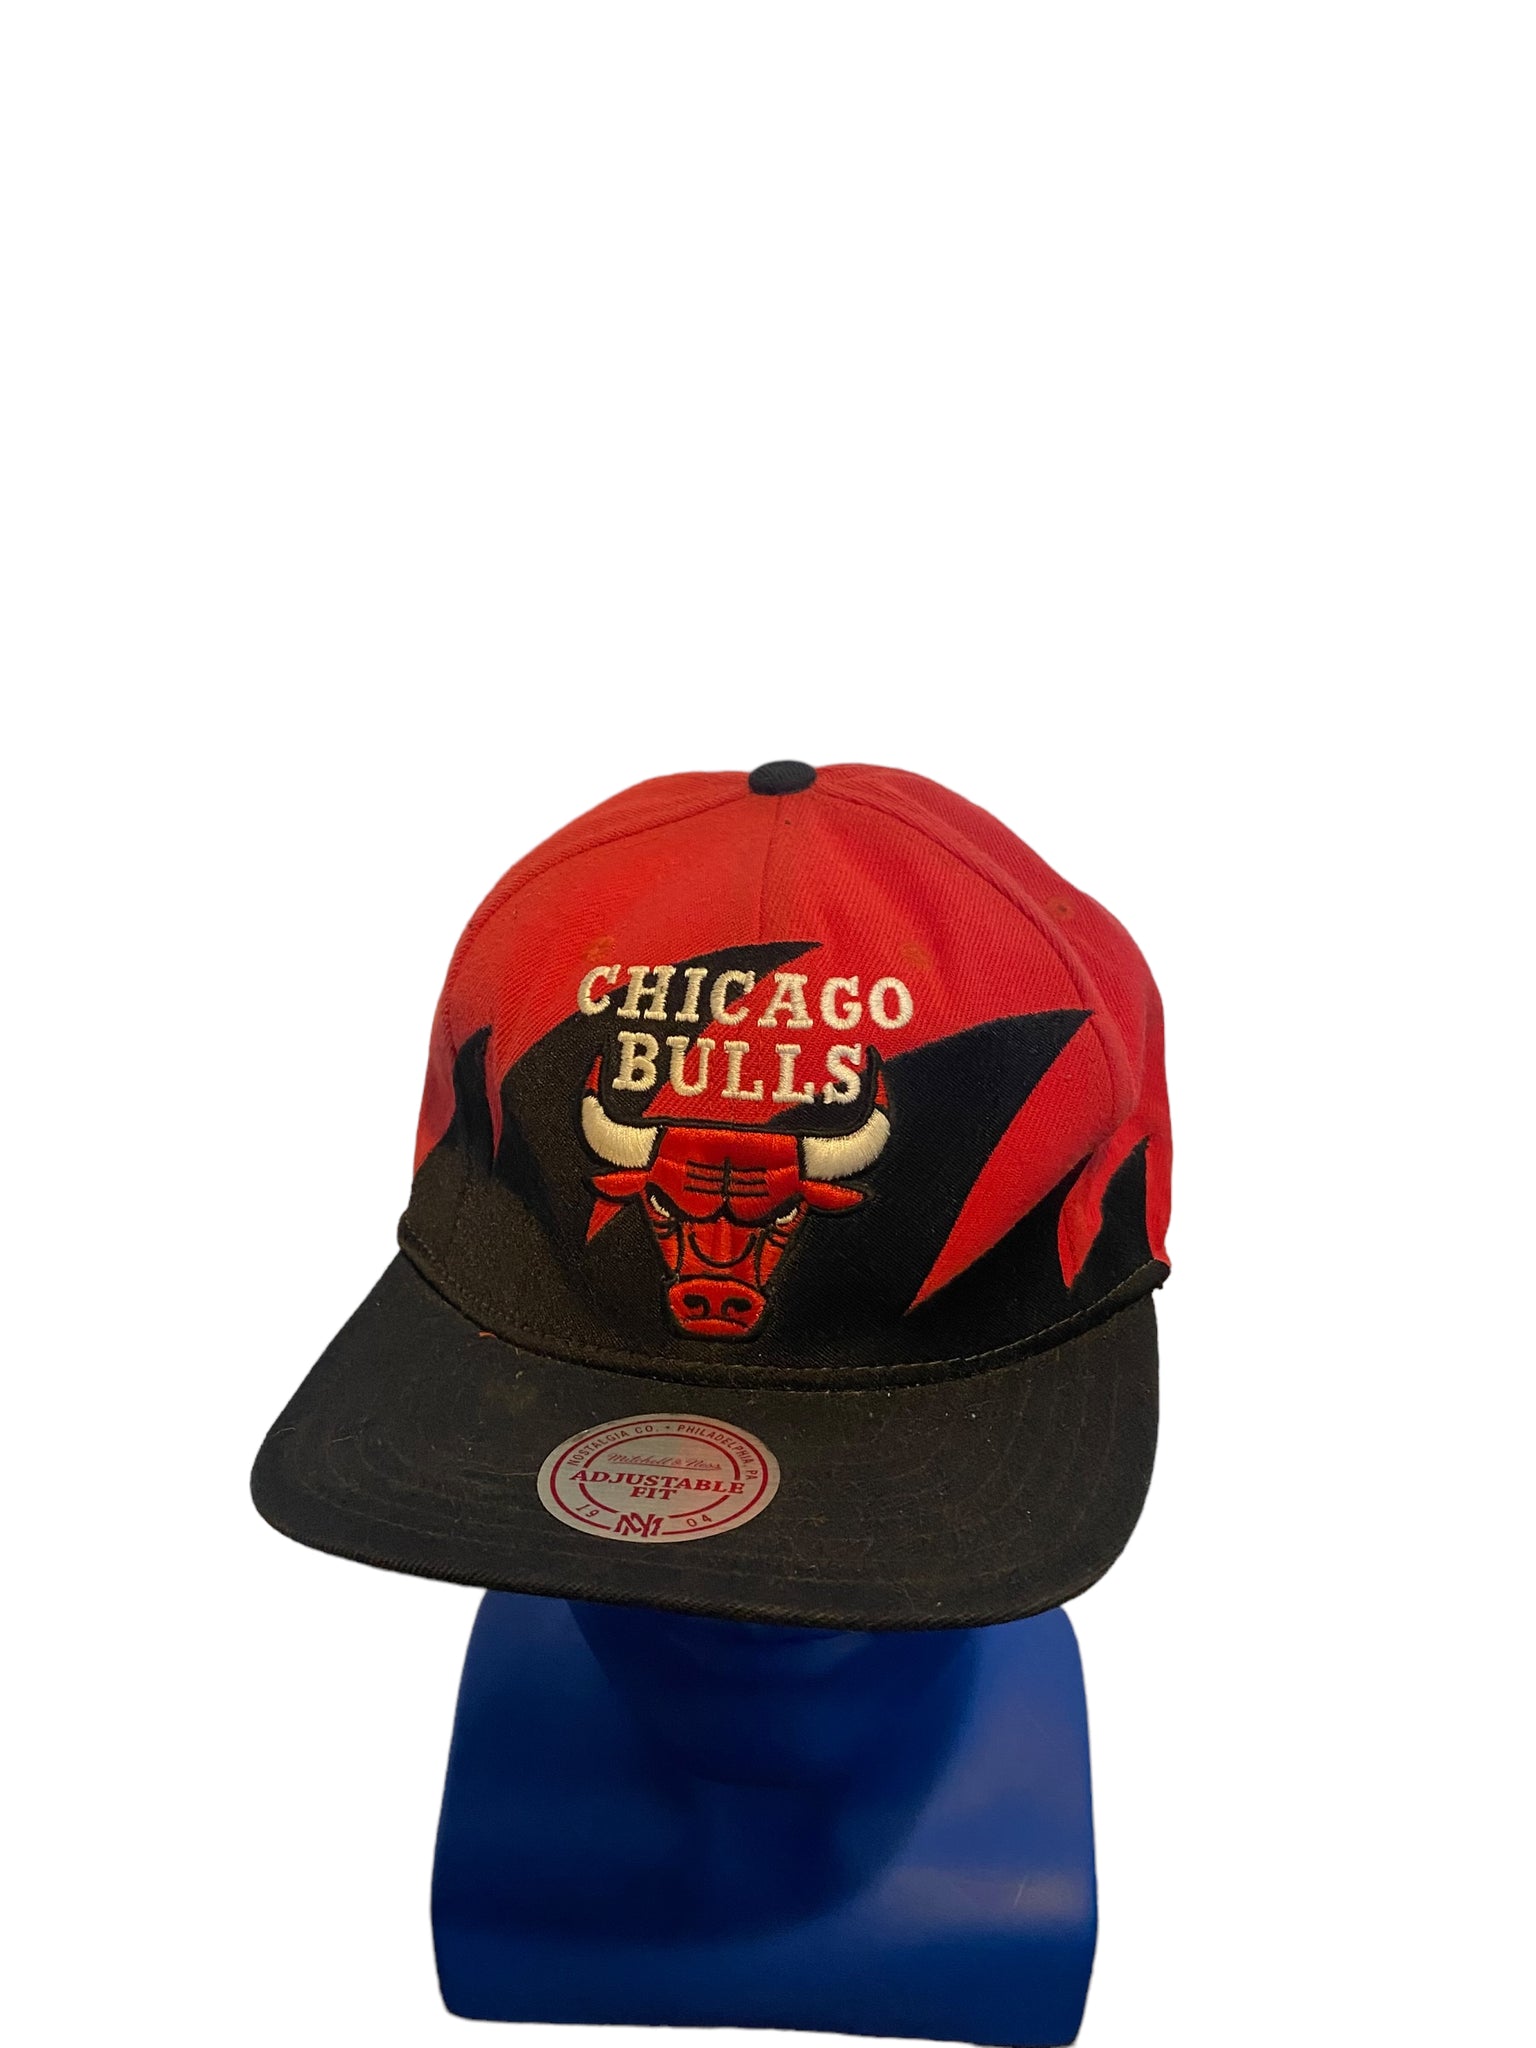 Chicago Bulls Hat Cap Snapback Black Red Shark Tooth NBA Basketball Mens Mitchell & ness